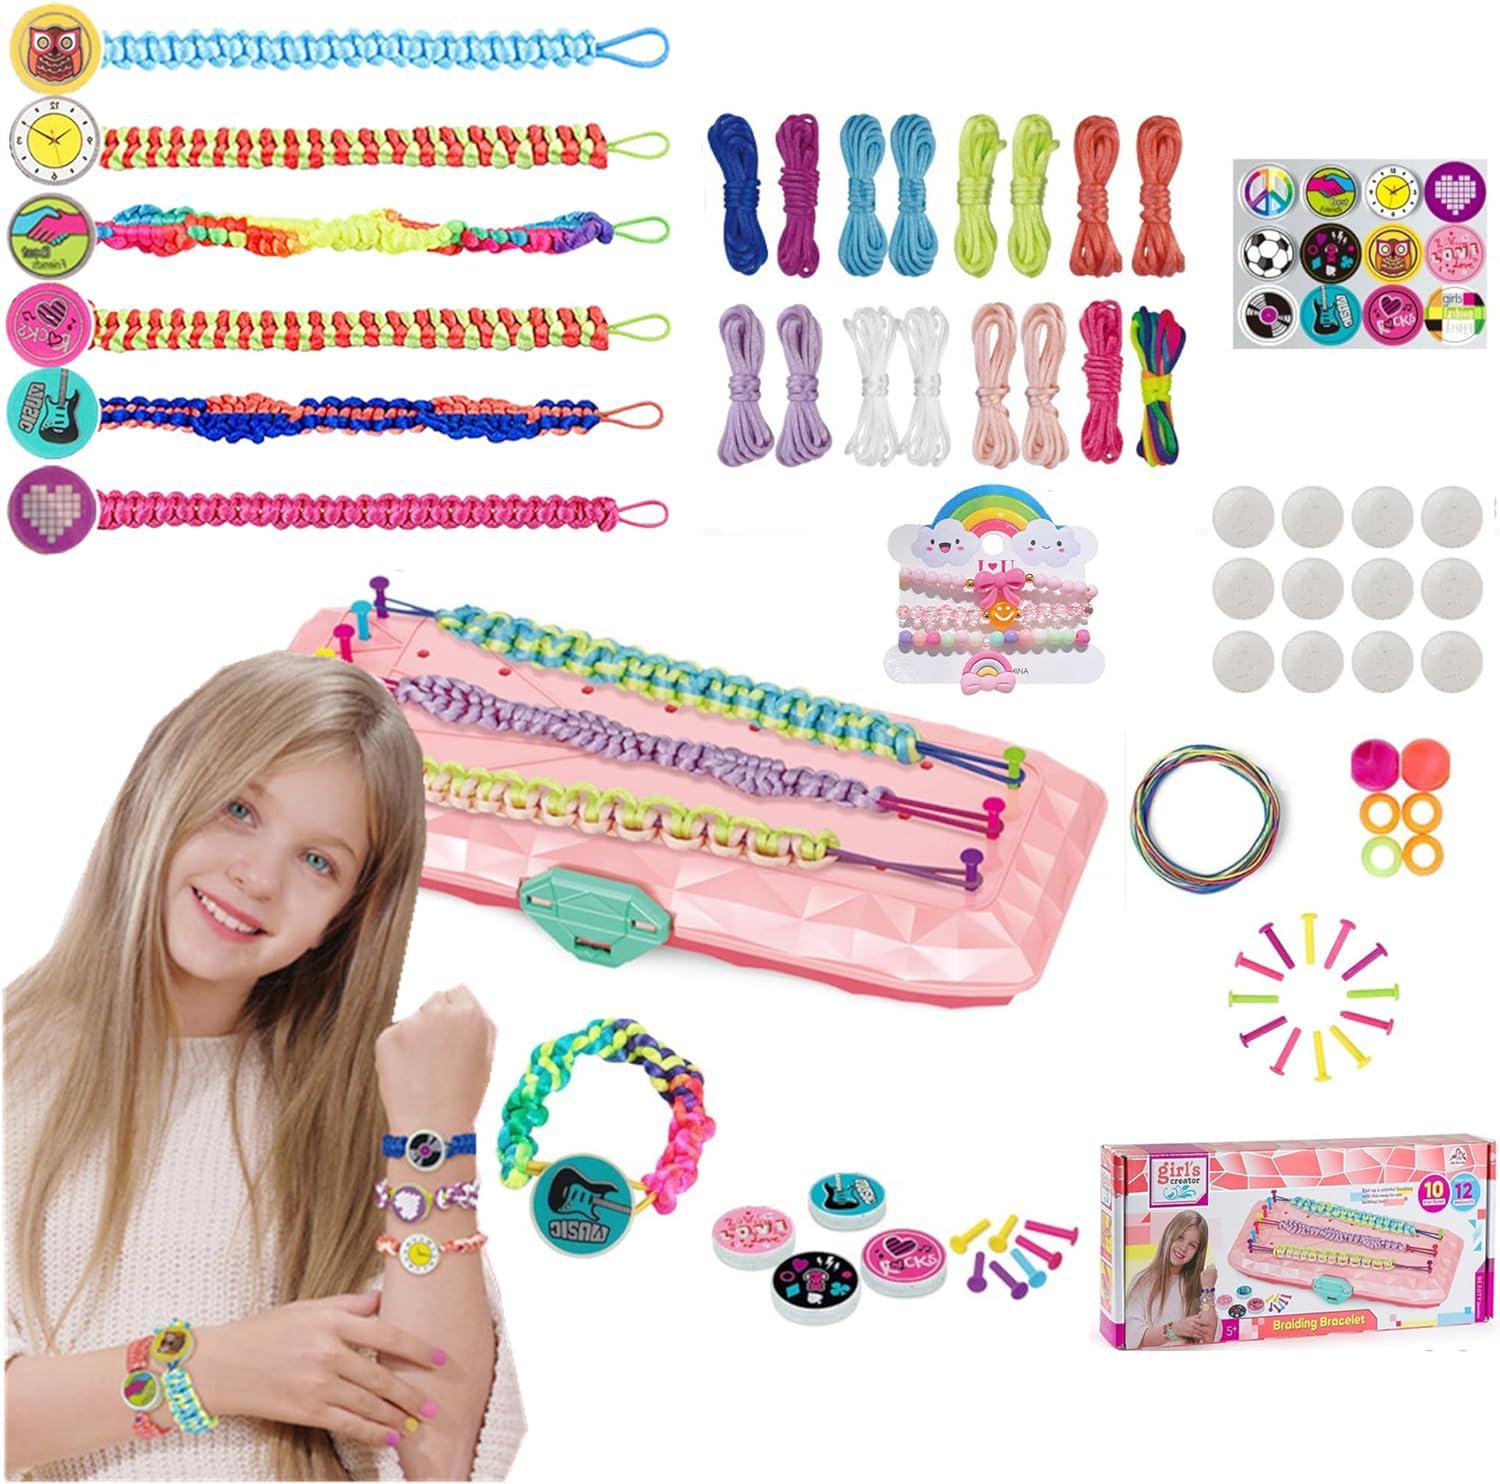 Dowsabel Bracelet Making Kit, Friendship Bracelet kit 24 Colors